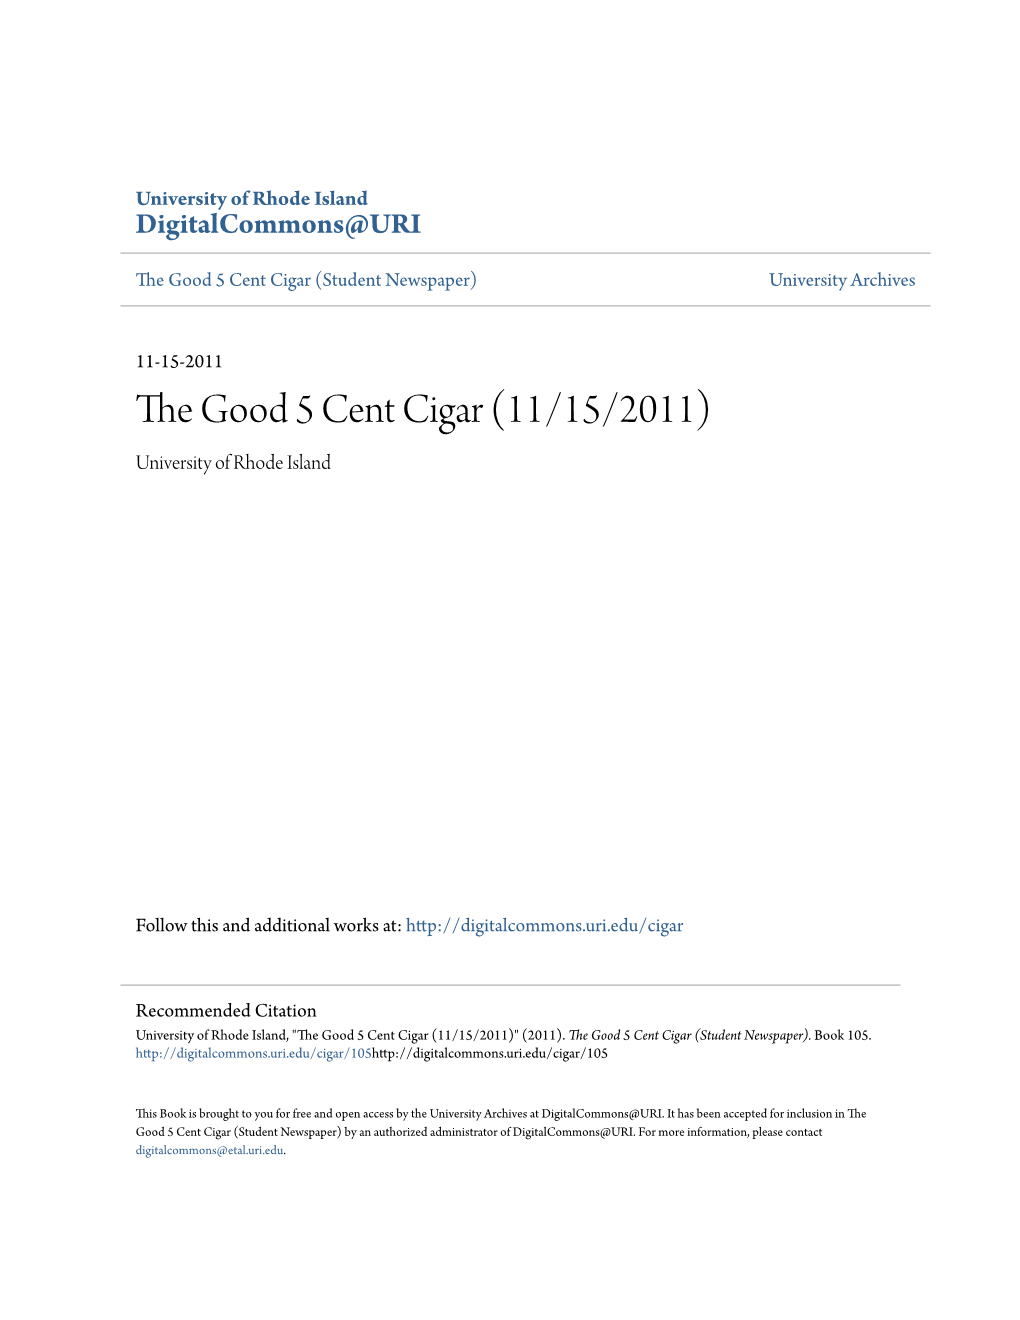 The Good 5 Cent Cigar (11/15/2011) University of Rhode Island